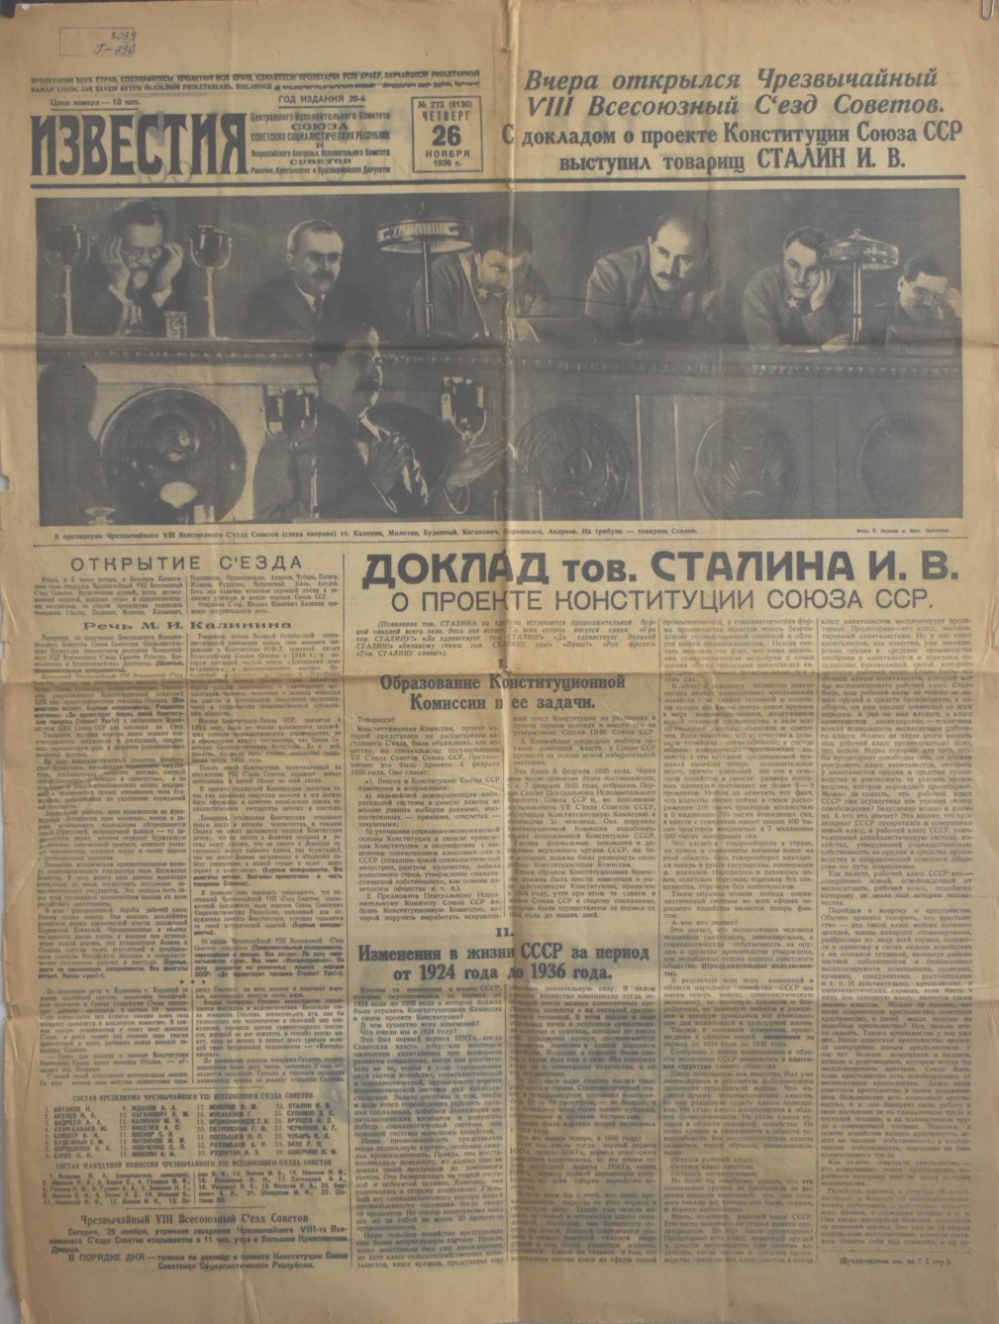 Газета " Известия" № 273 (6130), четвер 26 листопада 1936 року